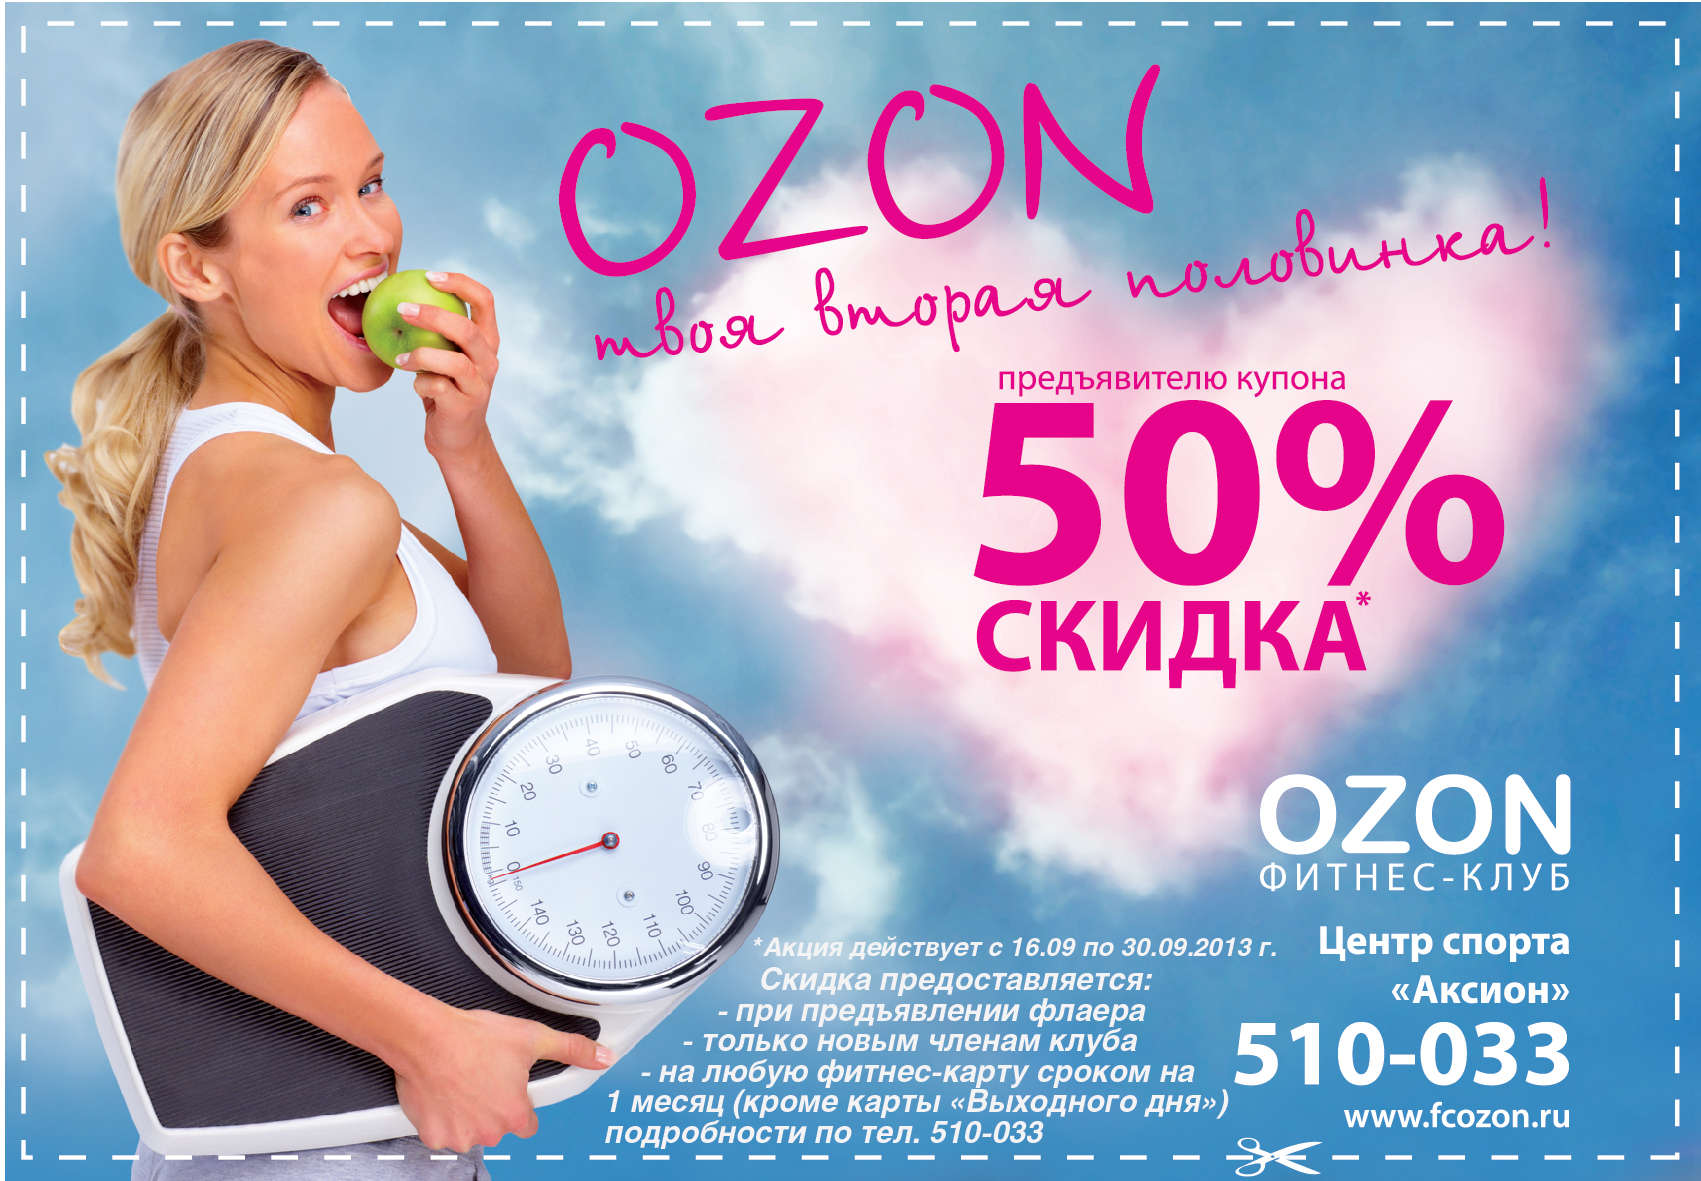 Сколько рекламу озон. OZON реклама. OZON скидки. Скидки. Баннер для акции Озон.